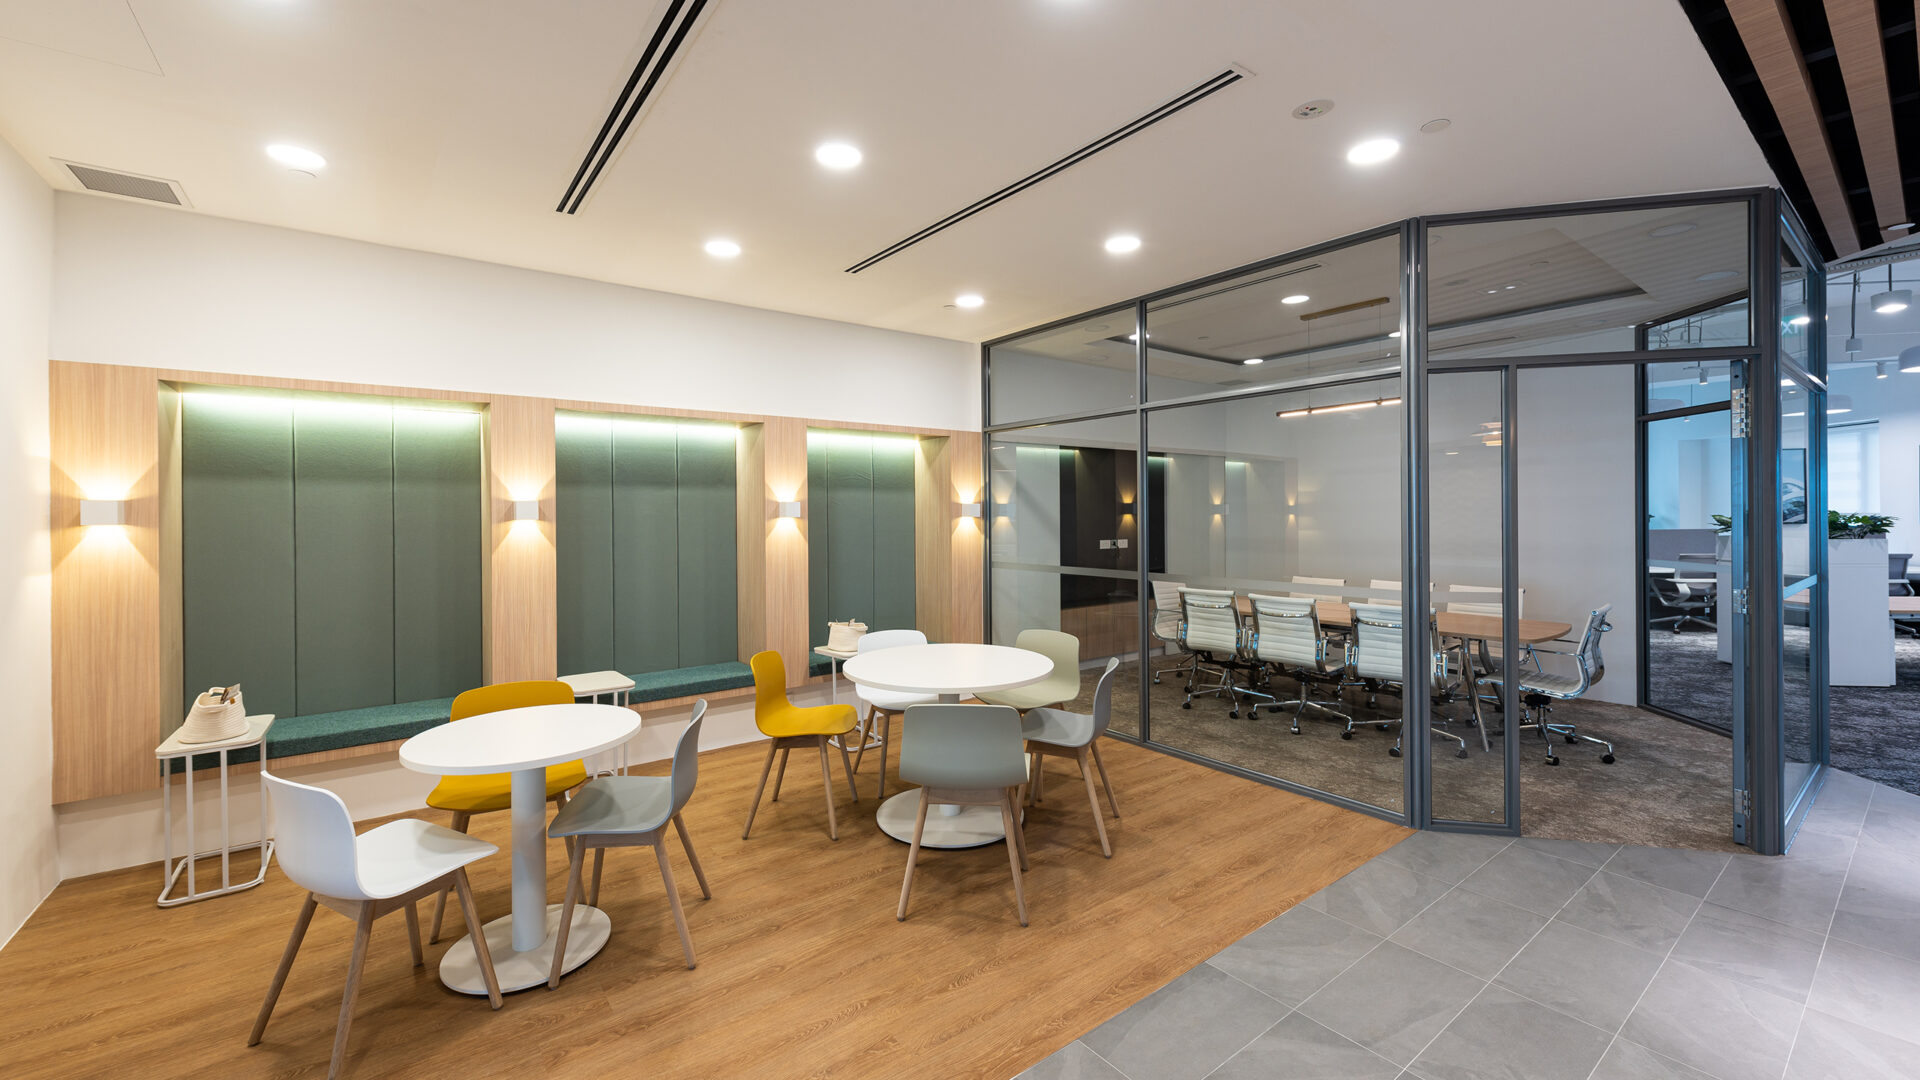 PLUS Show Office interior design by Aym Design boardroom break area